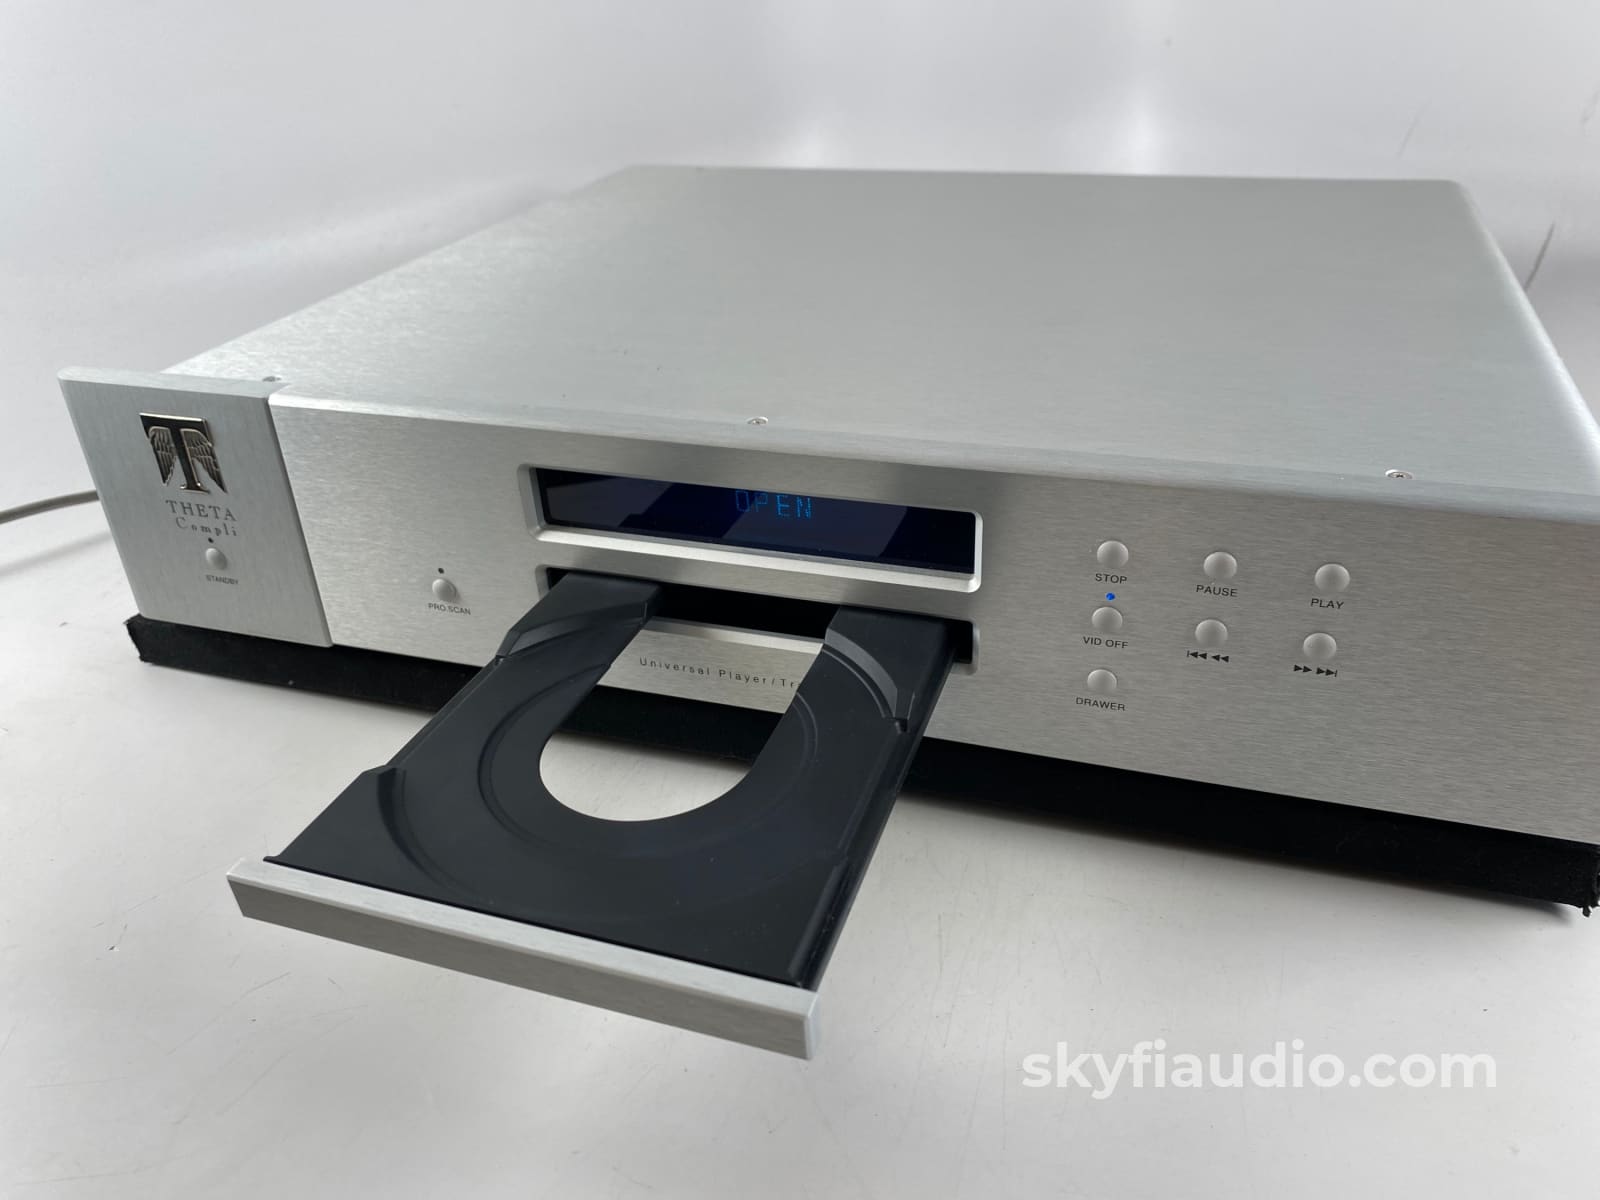 Theta Digital Compli - Universal Disc Player And Transport (Sacd/Cd/Cd-R/Mp3/Dvd-A) Cd +